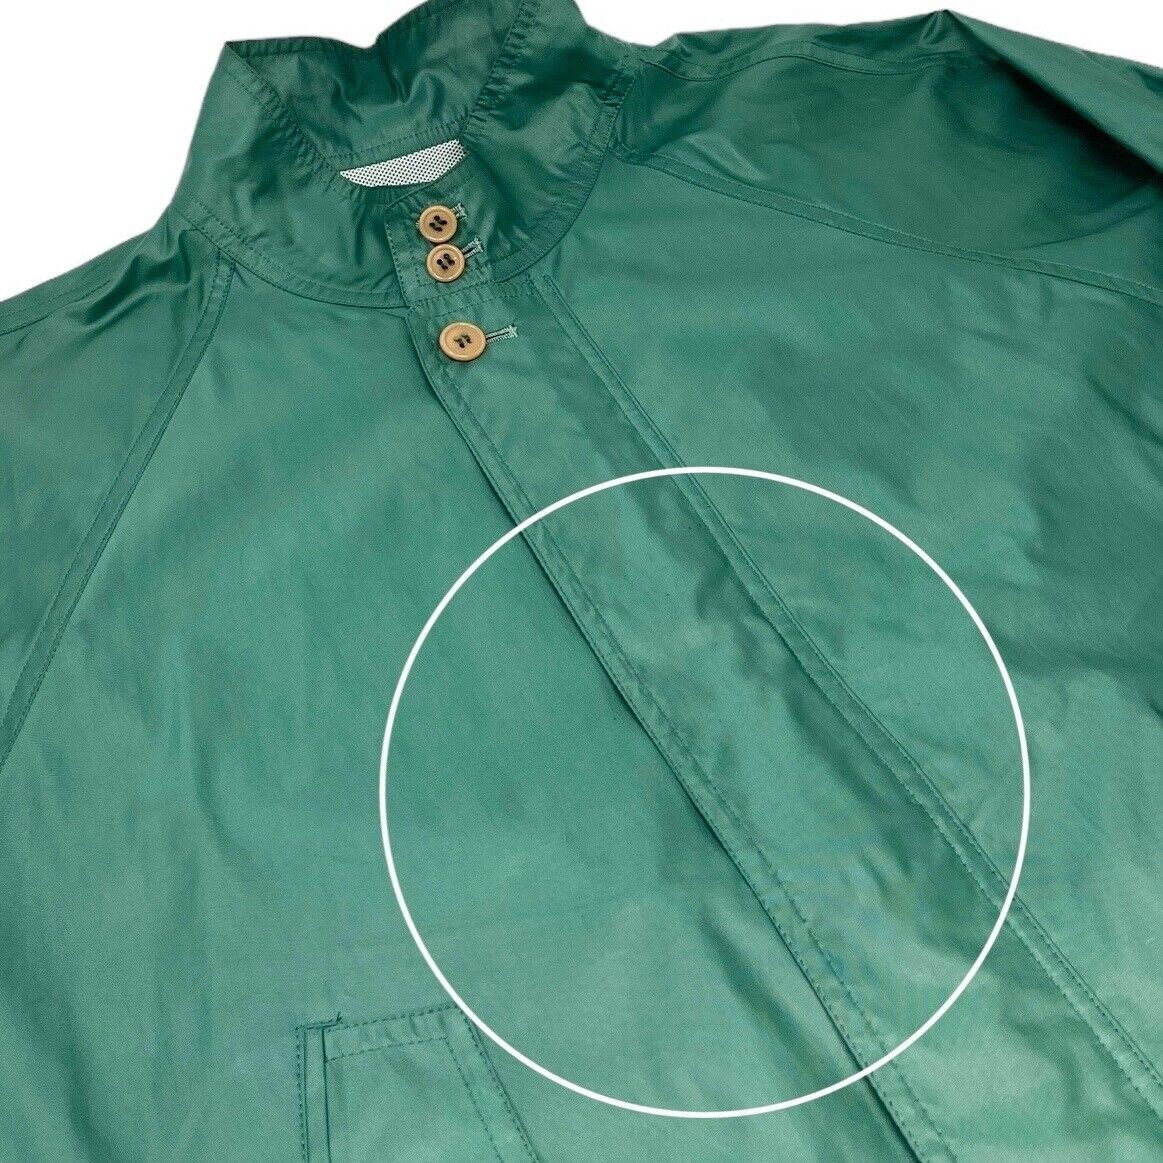 Christian Dior Sports Vintage Big Logo Track Jacket #L Green Polyester RankAB